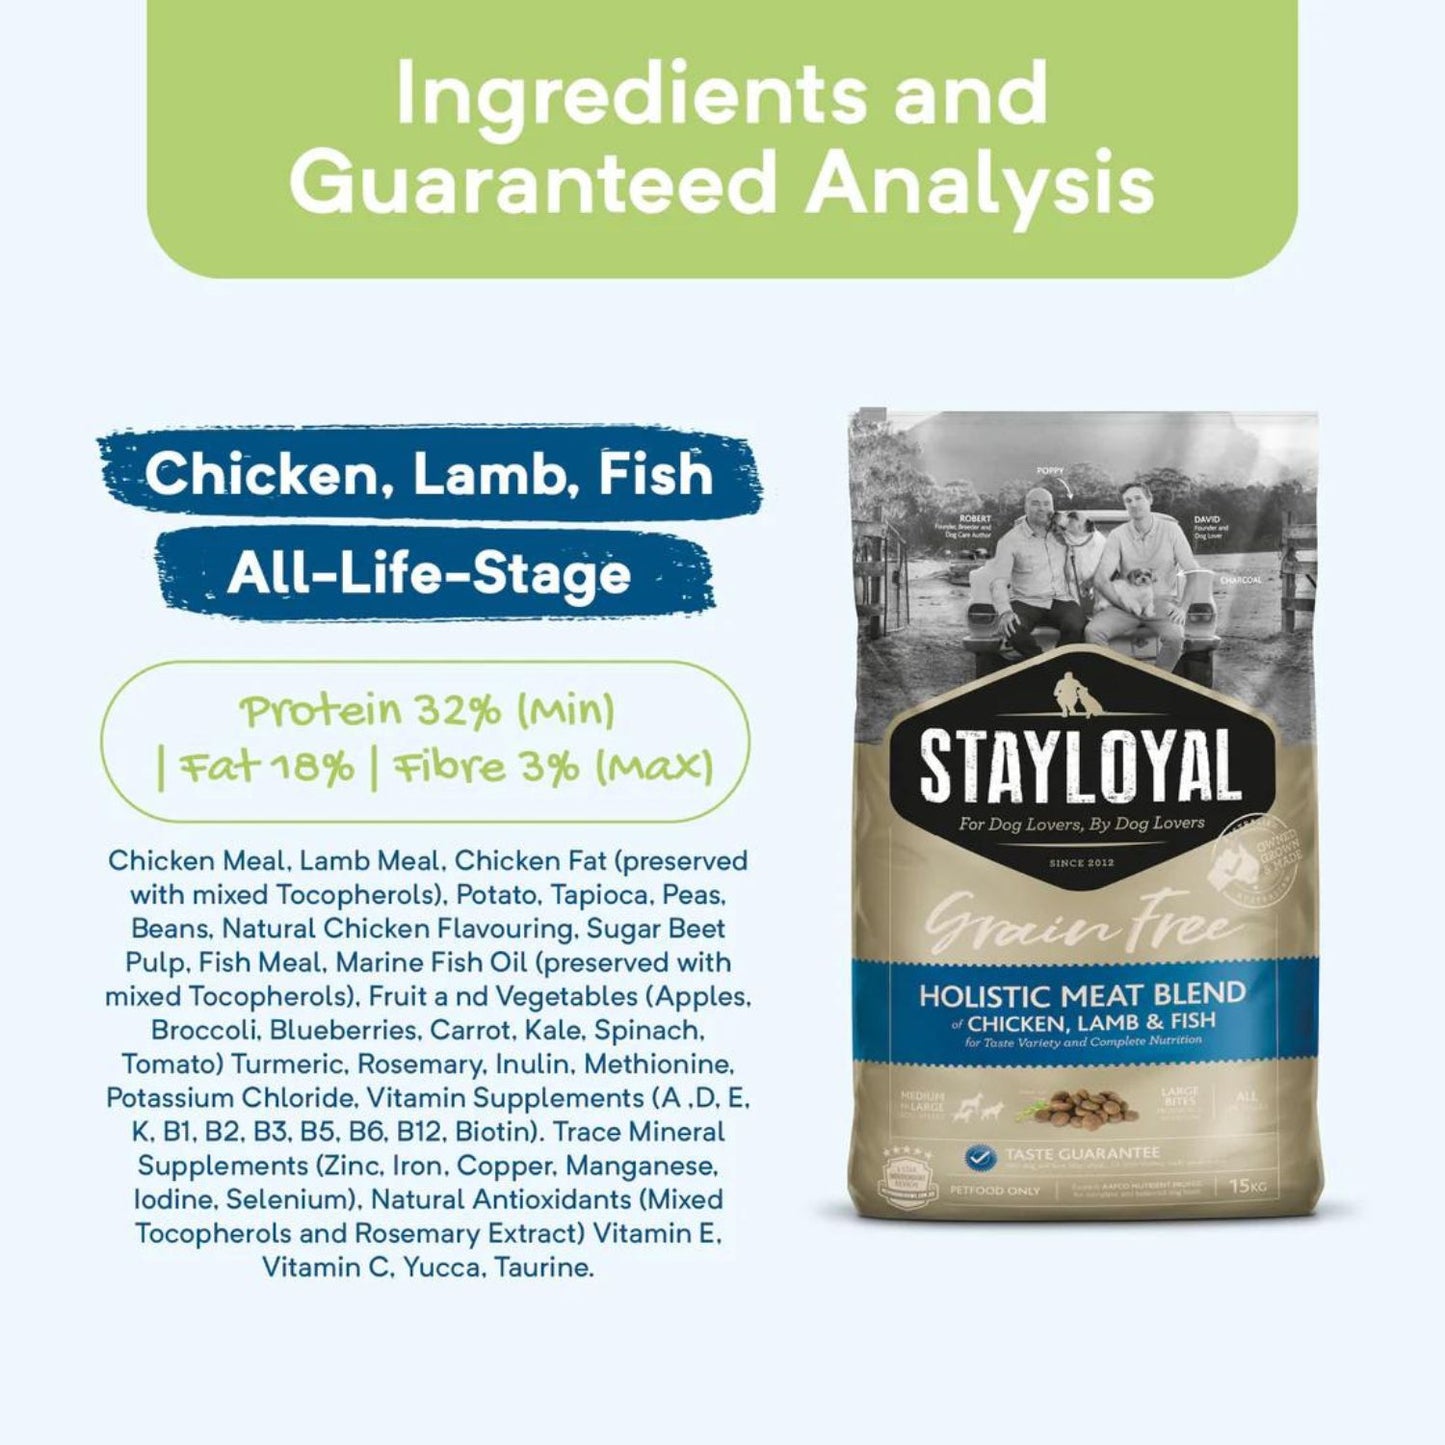 Chicken, Lamb & Fish Grain-Free Dog Food